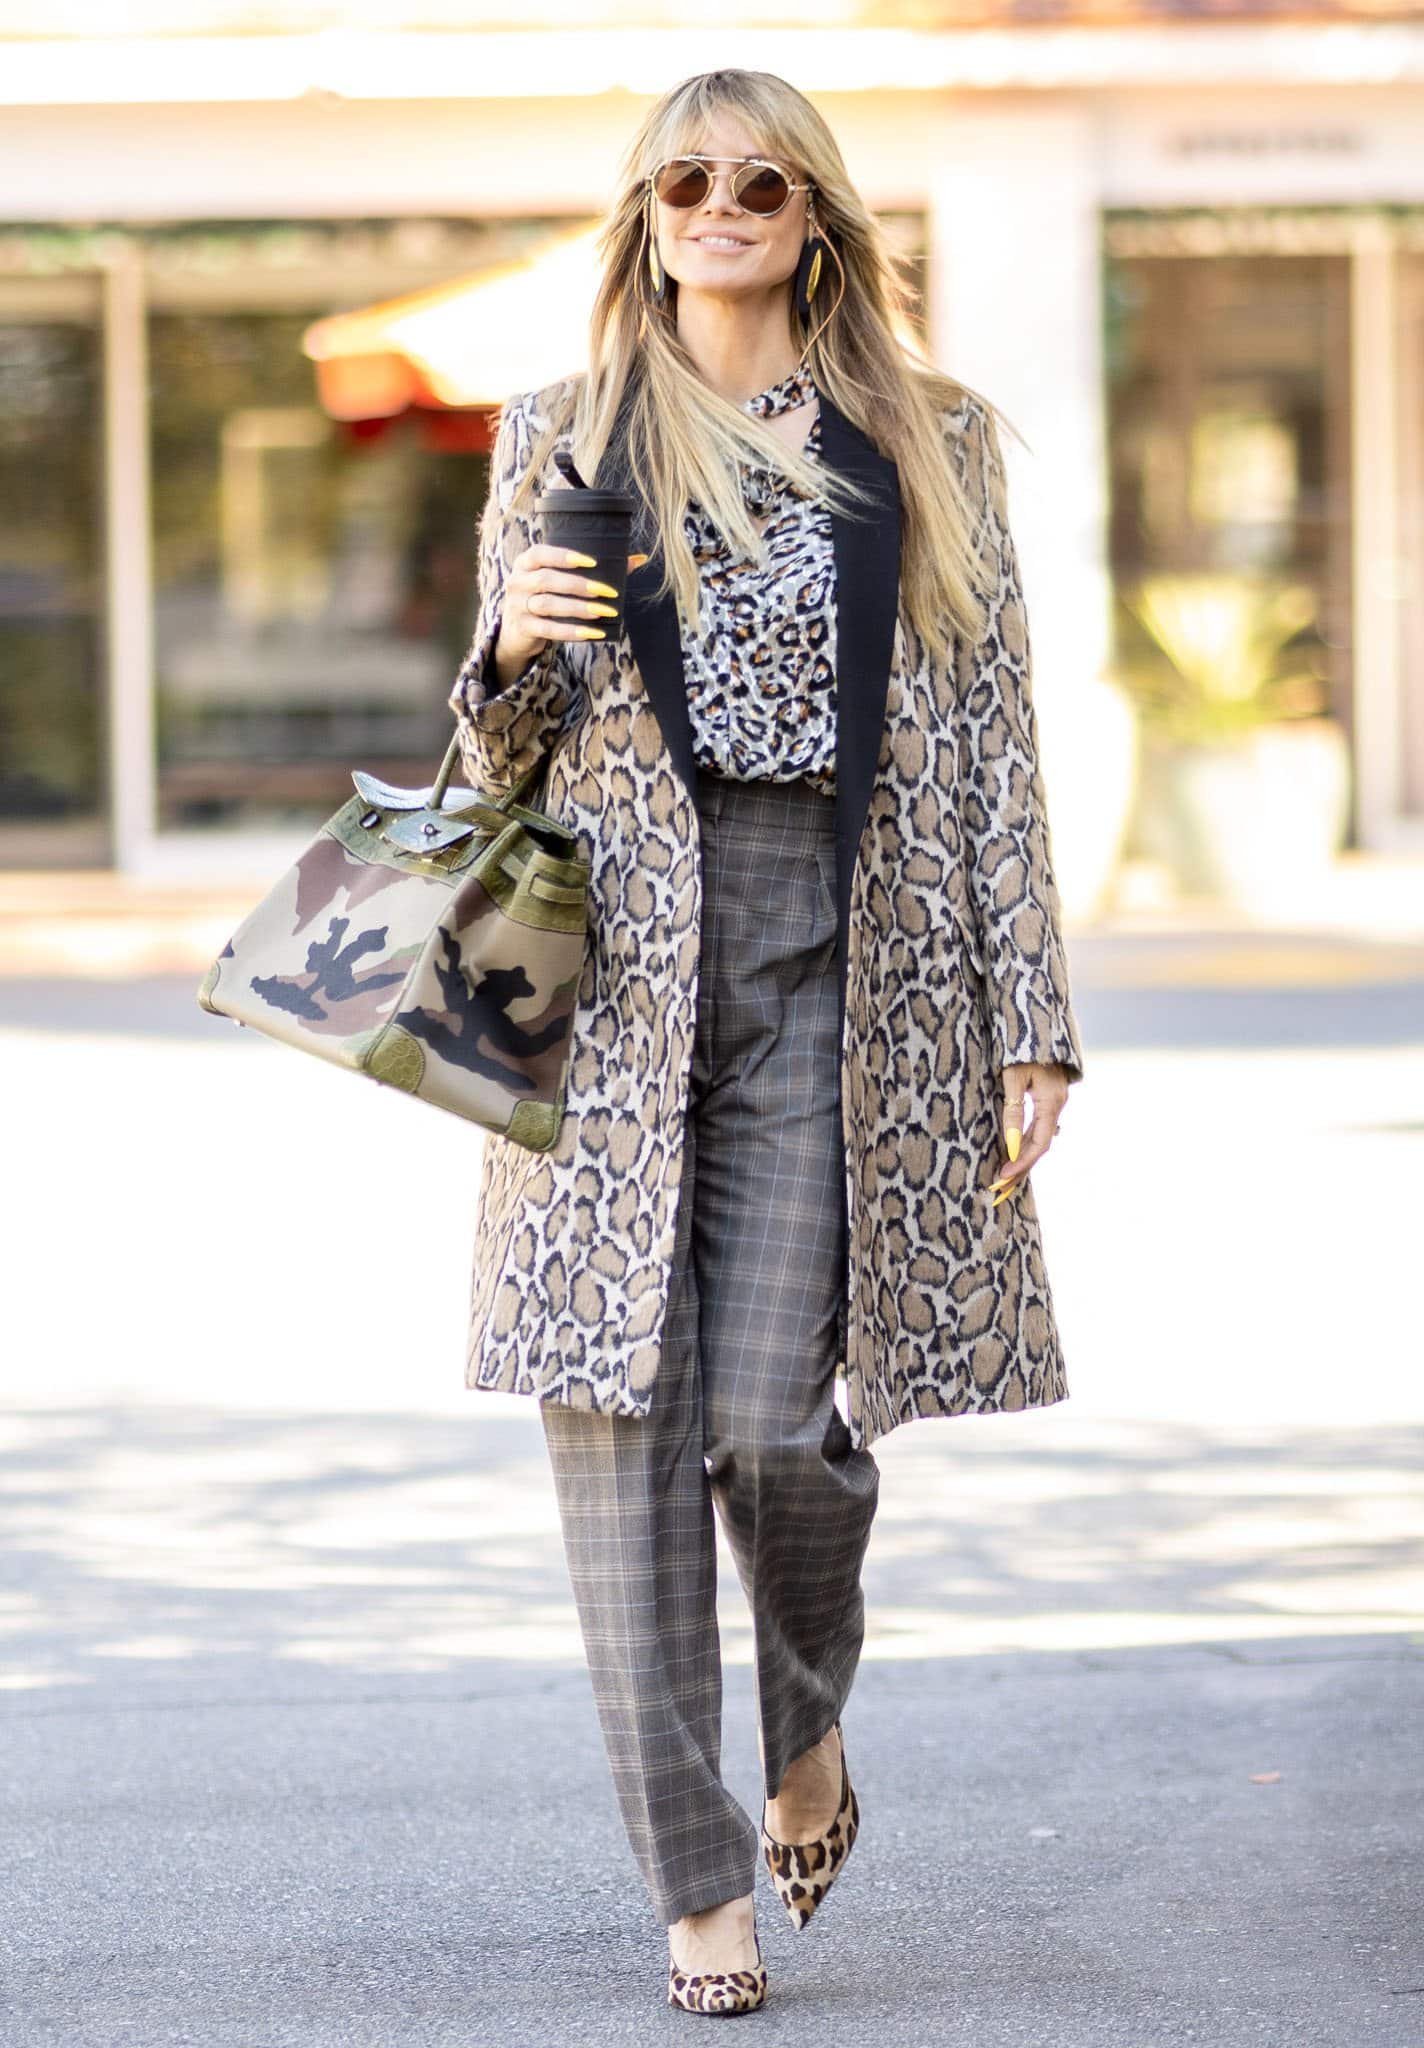 Heidi Klum wearing leopard print blouse, coat, and pumps